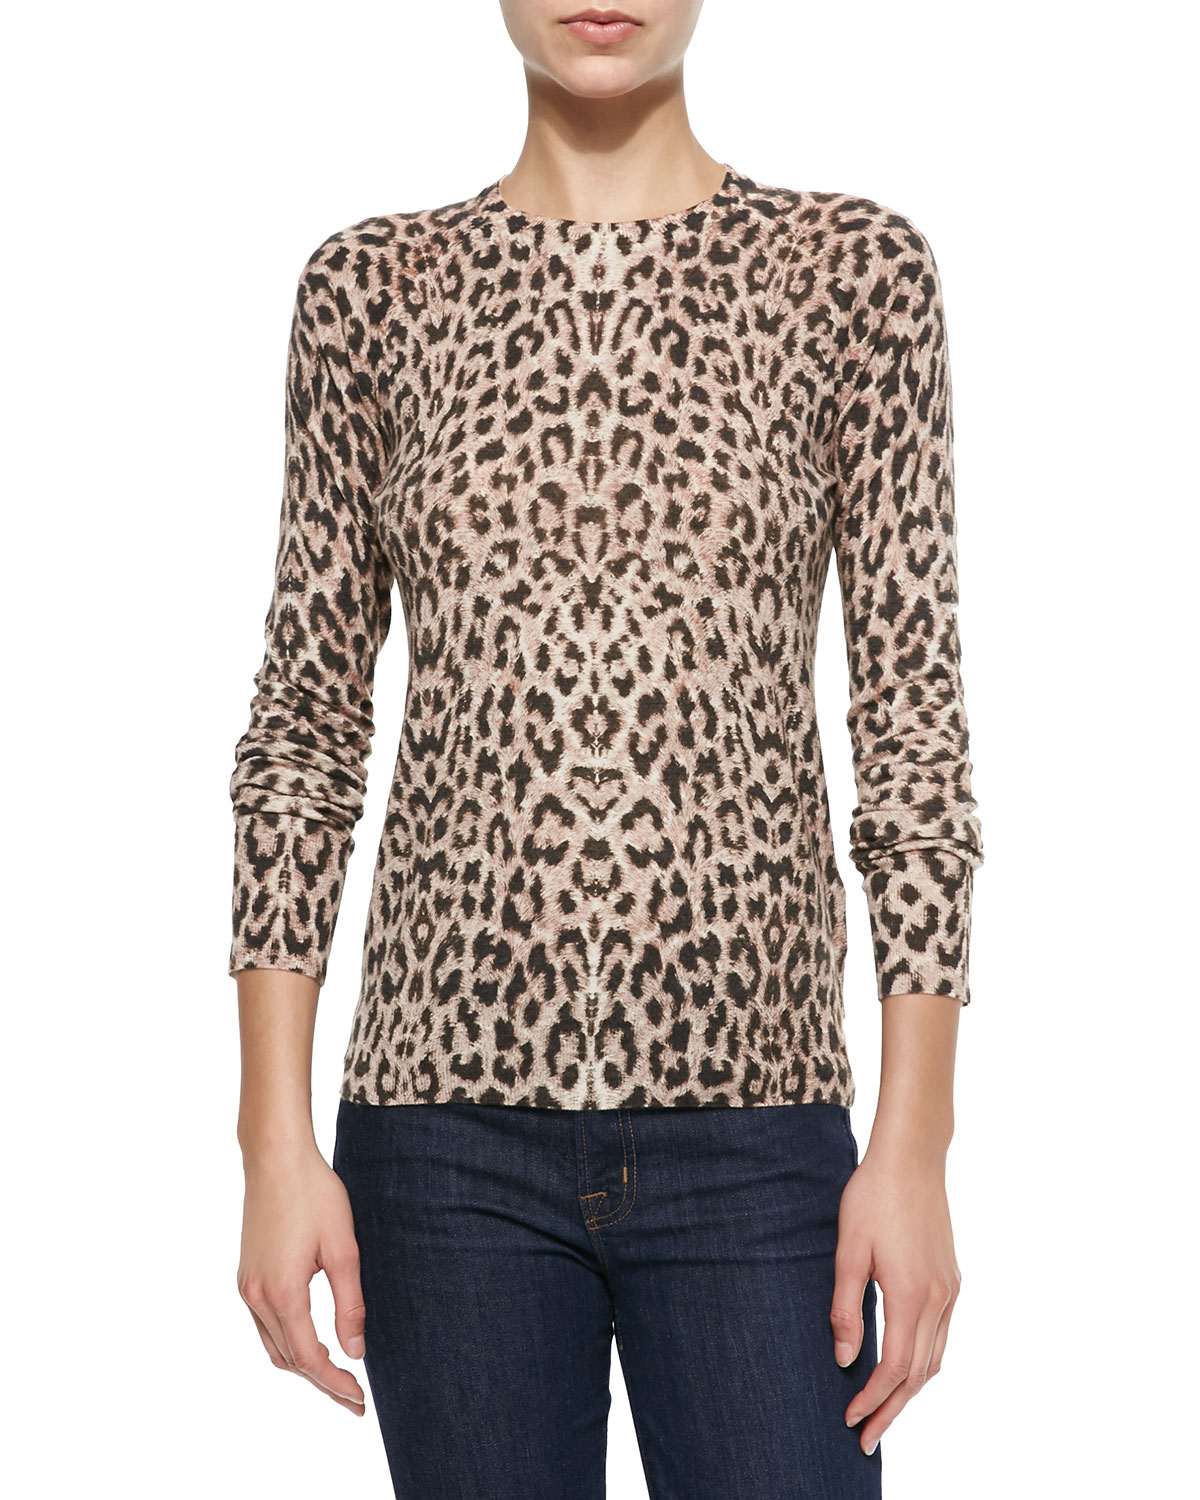 Equipment | Animal Sloane Leopard-Print Crewneck Sweater | Lyst